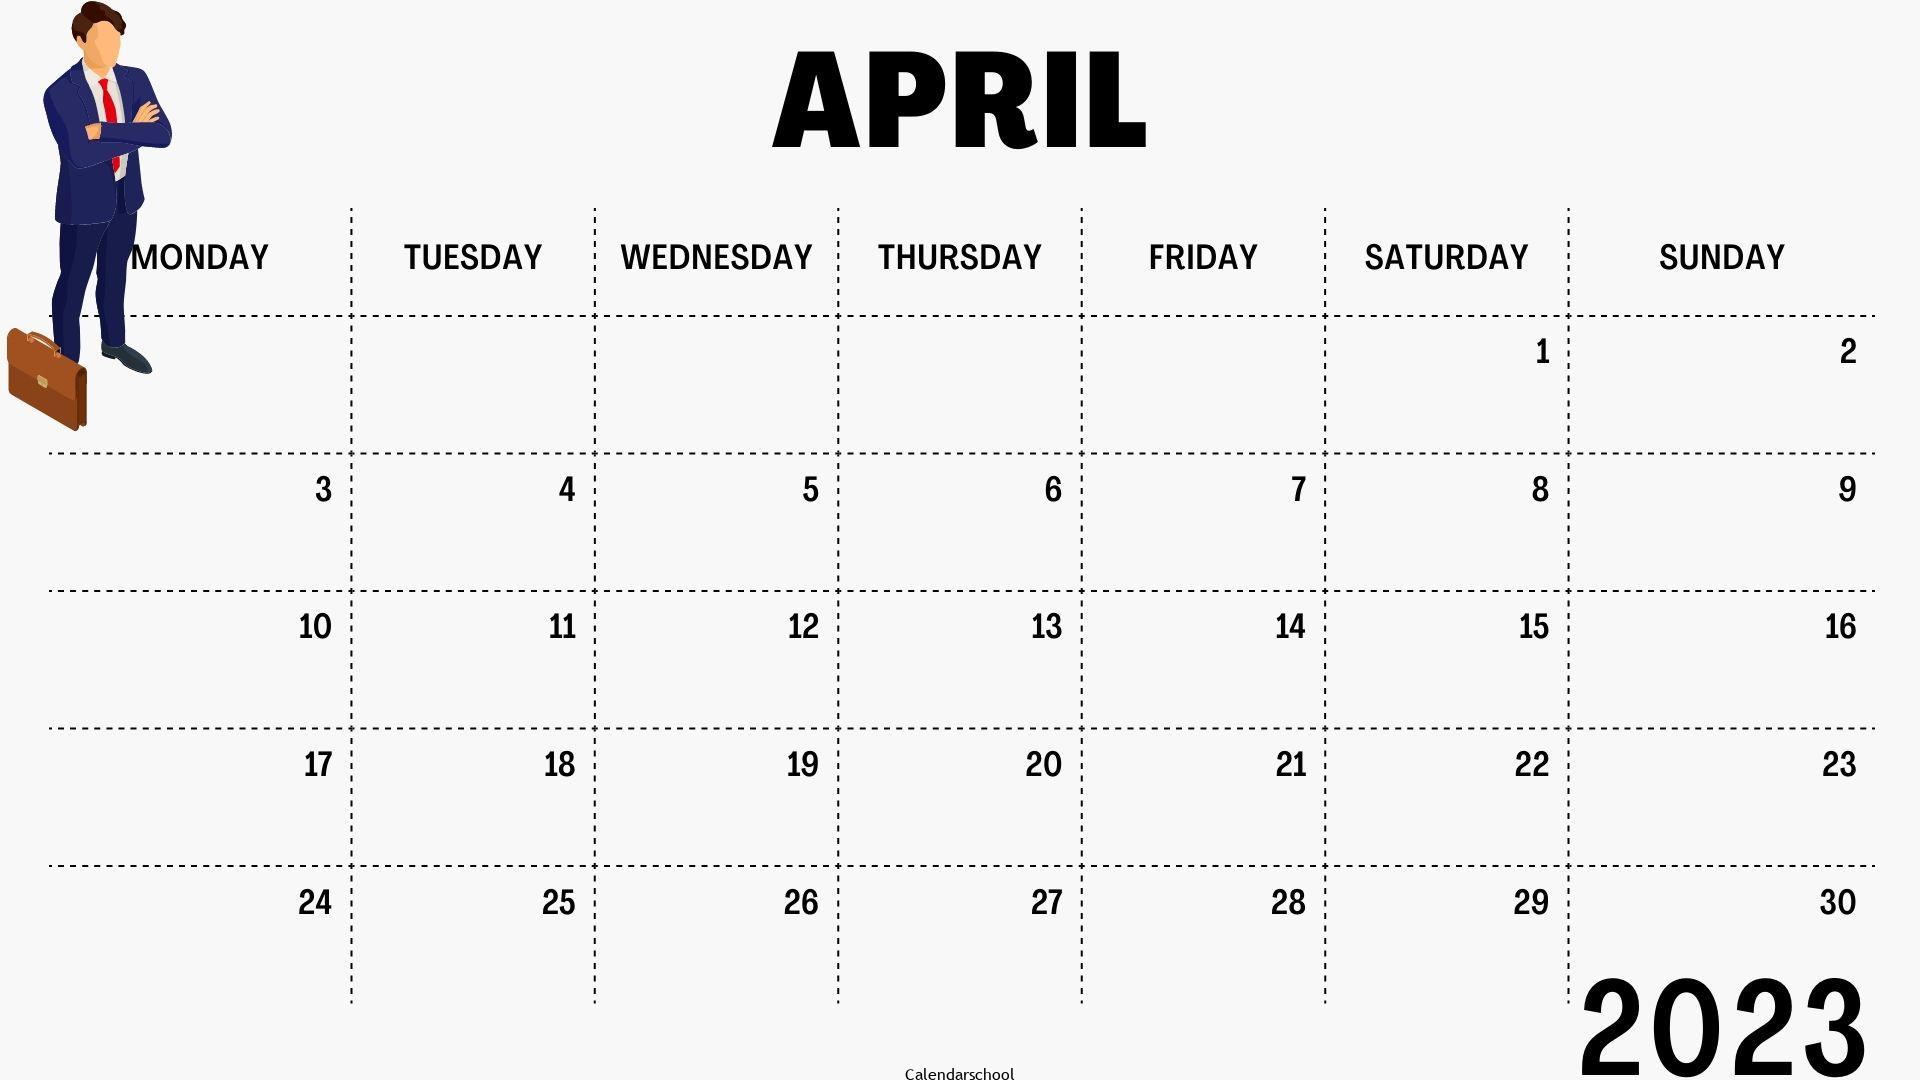 April 2023 Calendar Template For Google Sheets